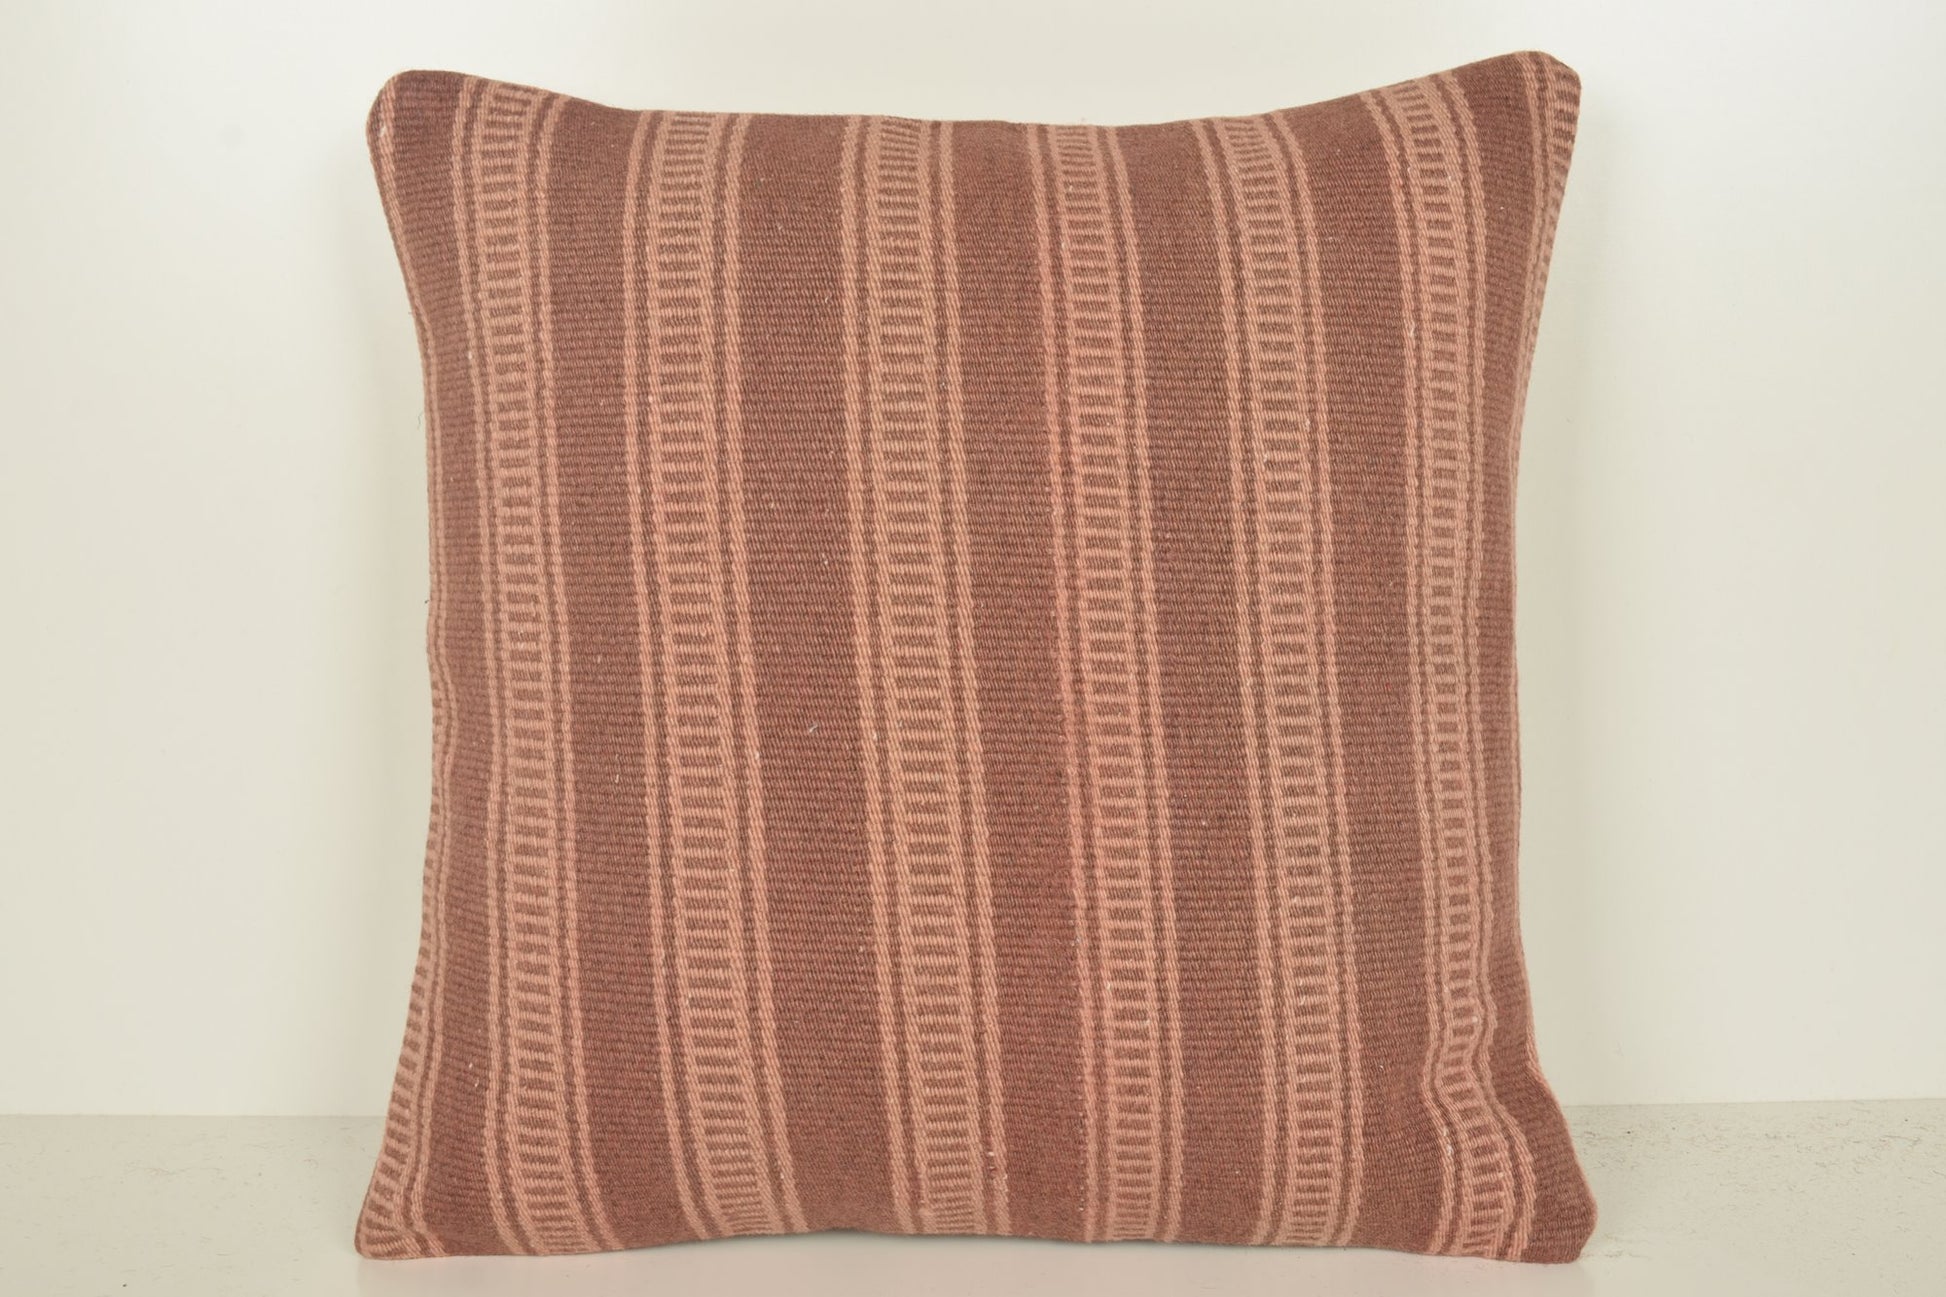 Kilim Style Pillow Covers C01351 18x18 Urban Clean Crochet